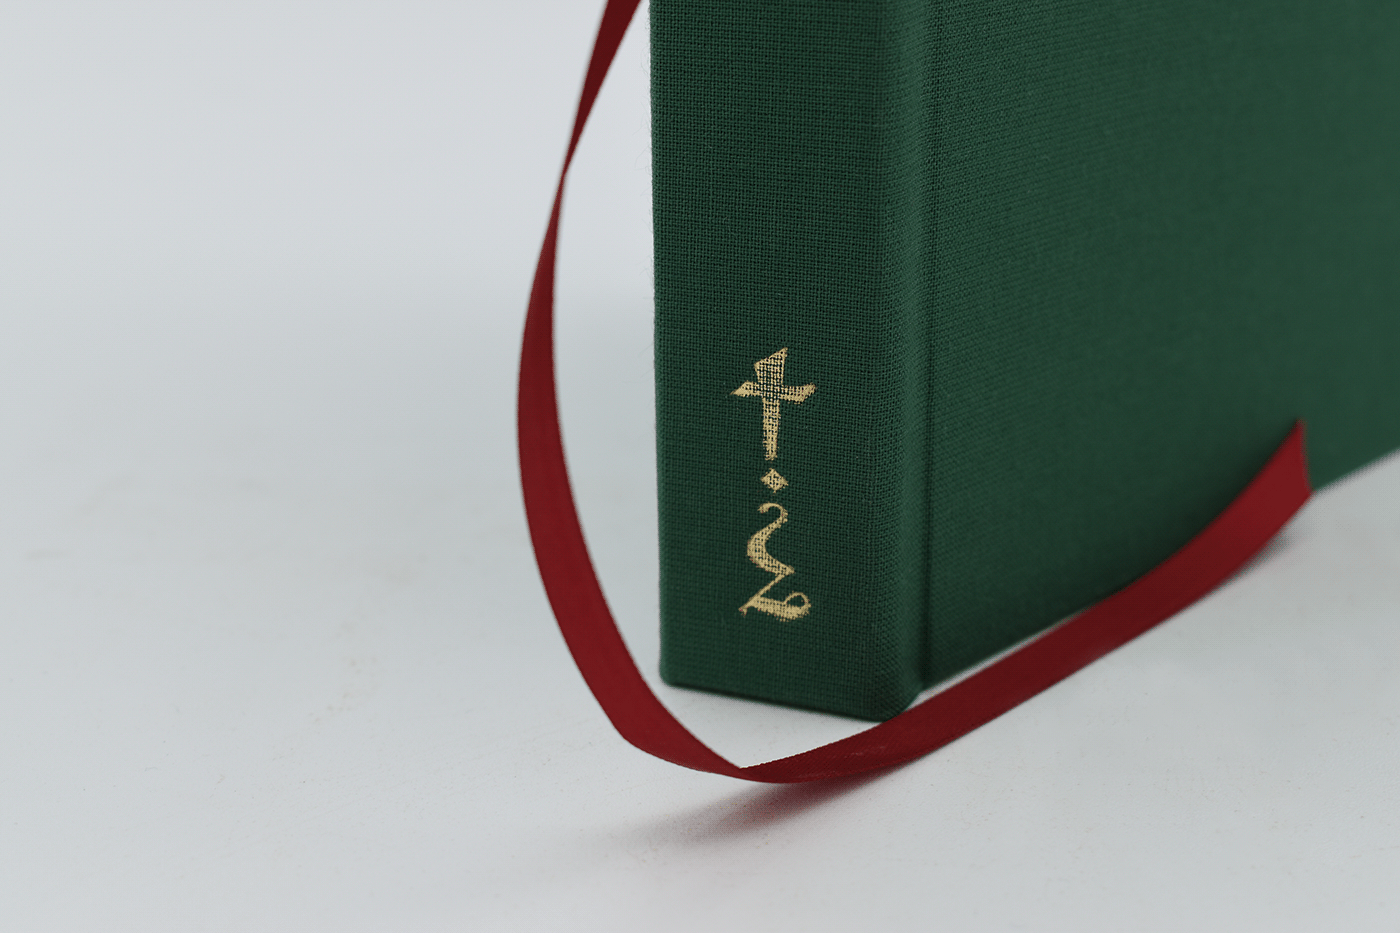 book Book Binding book design Doubt faith family handmade interview religion typography  